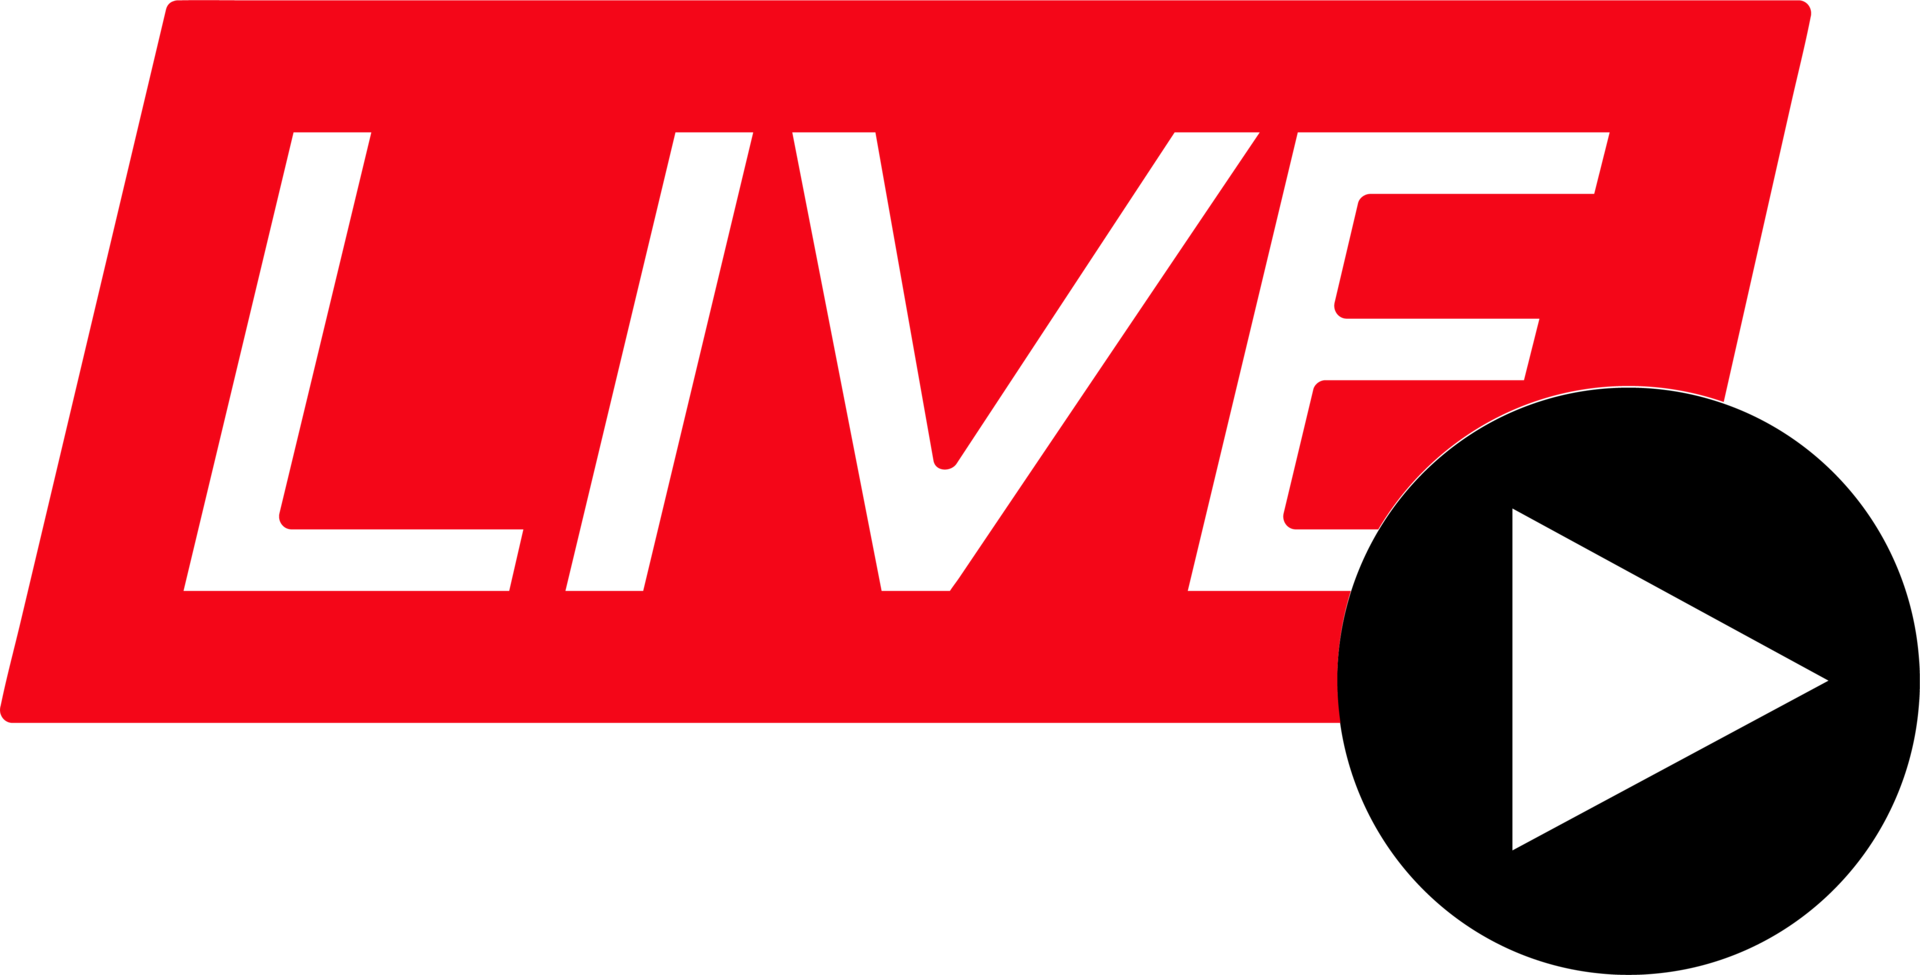 live streaming online teken symbool ontwerp png